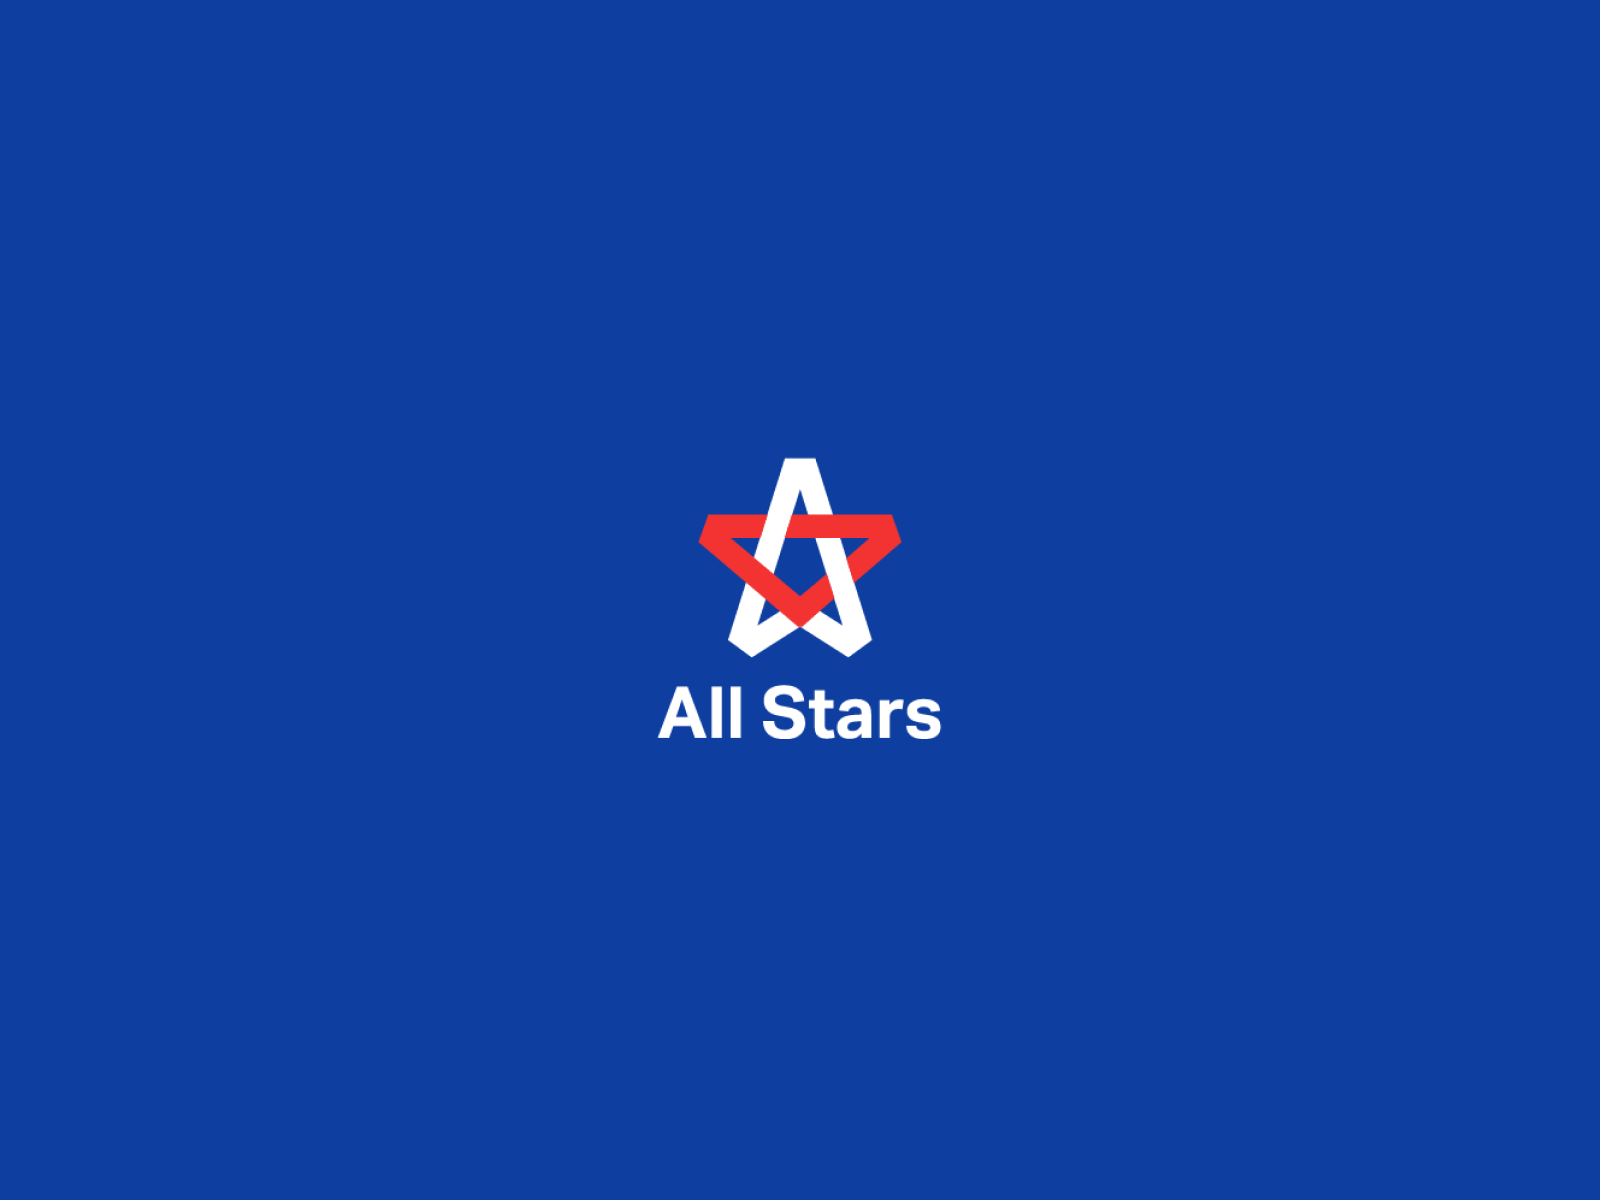 All Stars by Felipe Mandiola on Dribbble